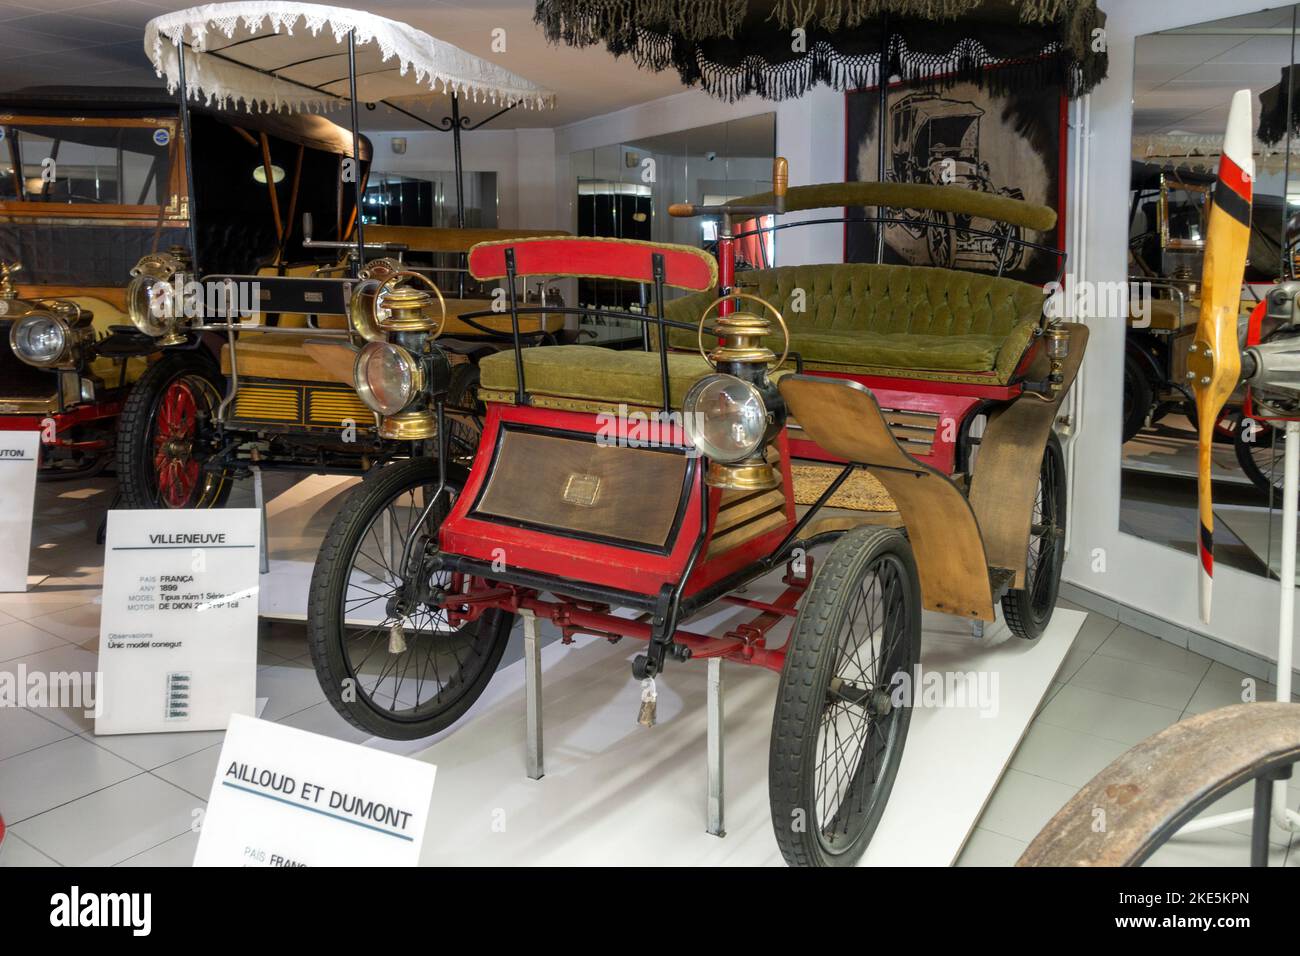 Ailloud et Dumond Modell N2,1900.Motor: De Dion 21/3HP.Frankreich.Automobilmuseum.Encamp.Andorra Stockfoto